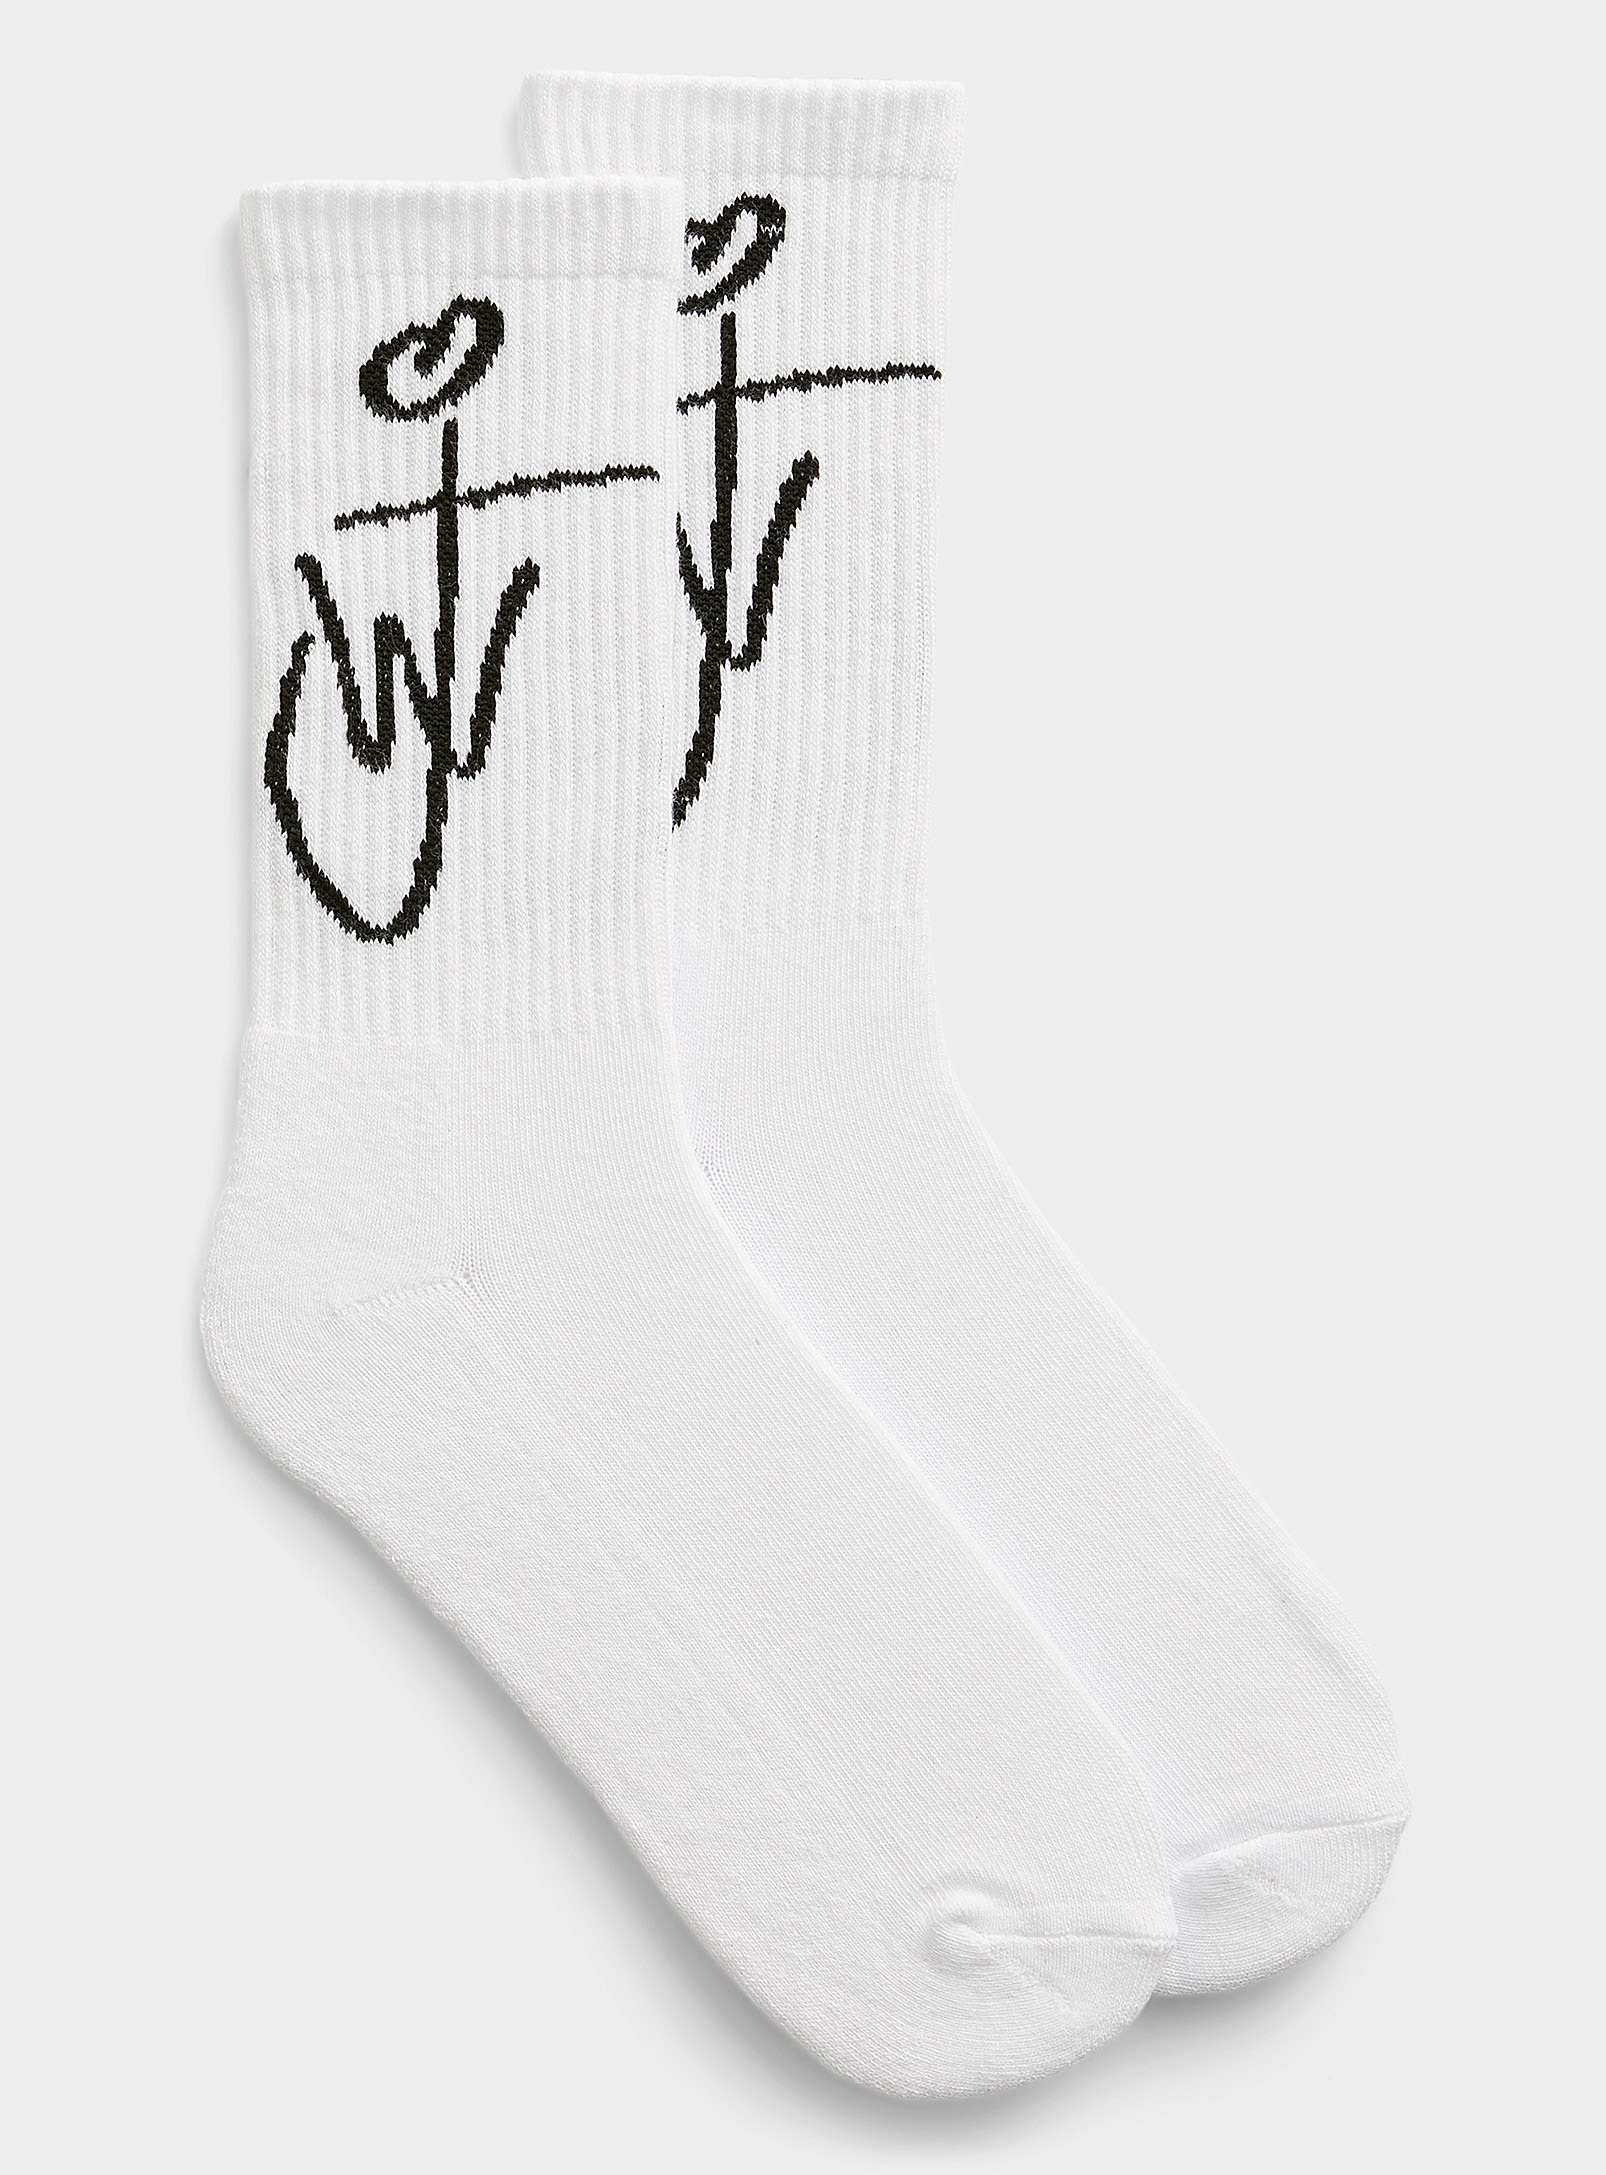 JW Anderson - Men's Anchor socks